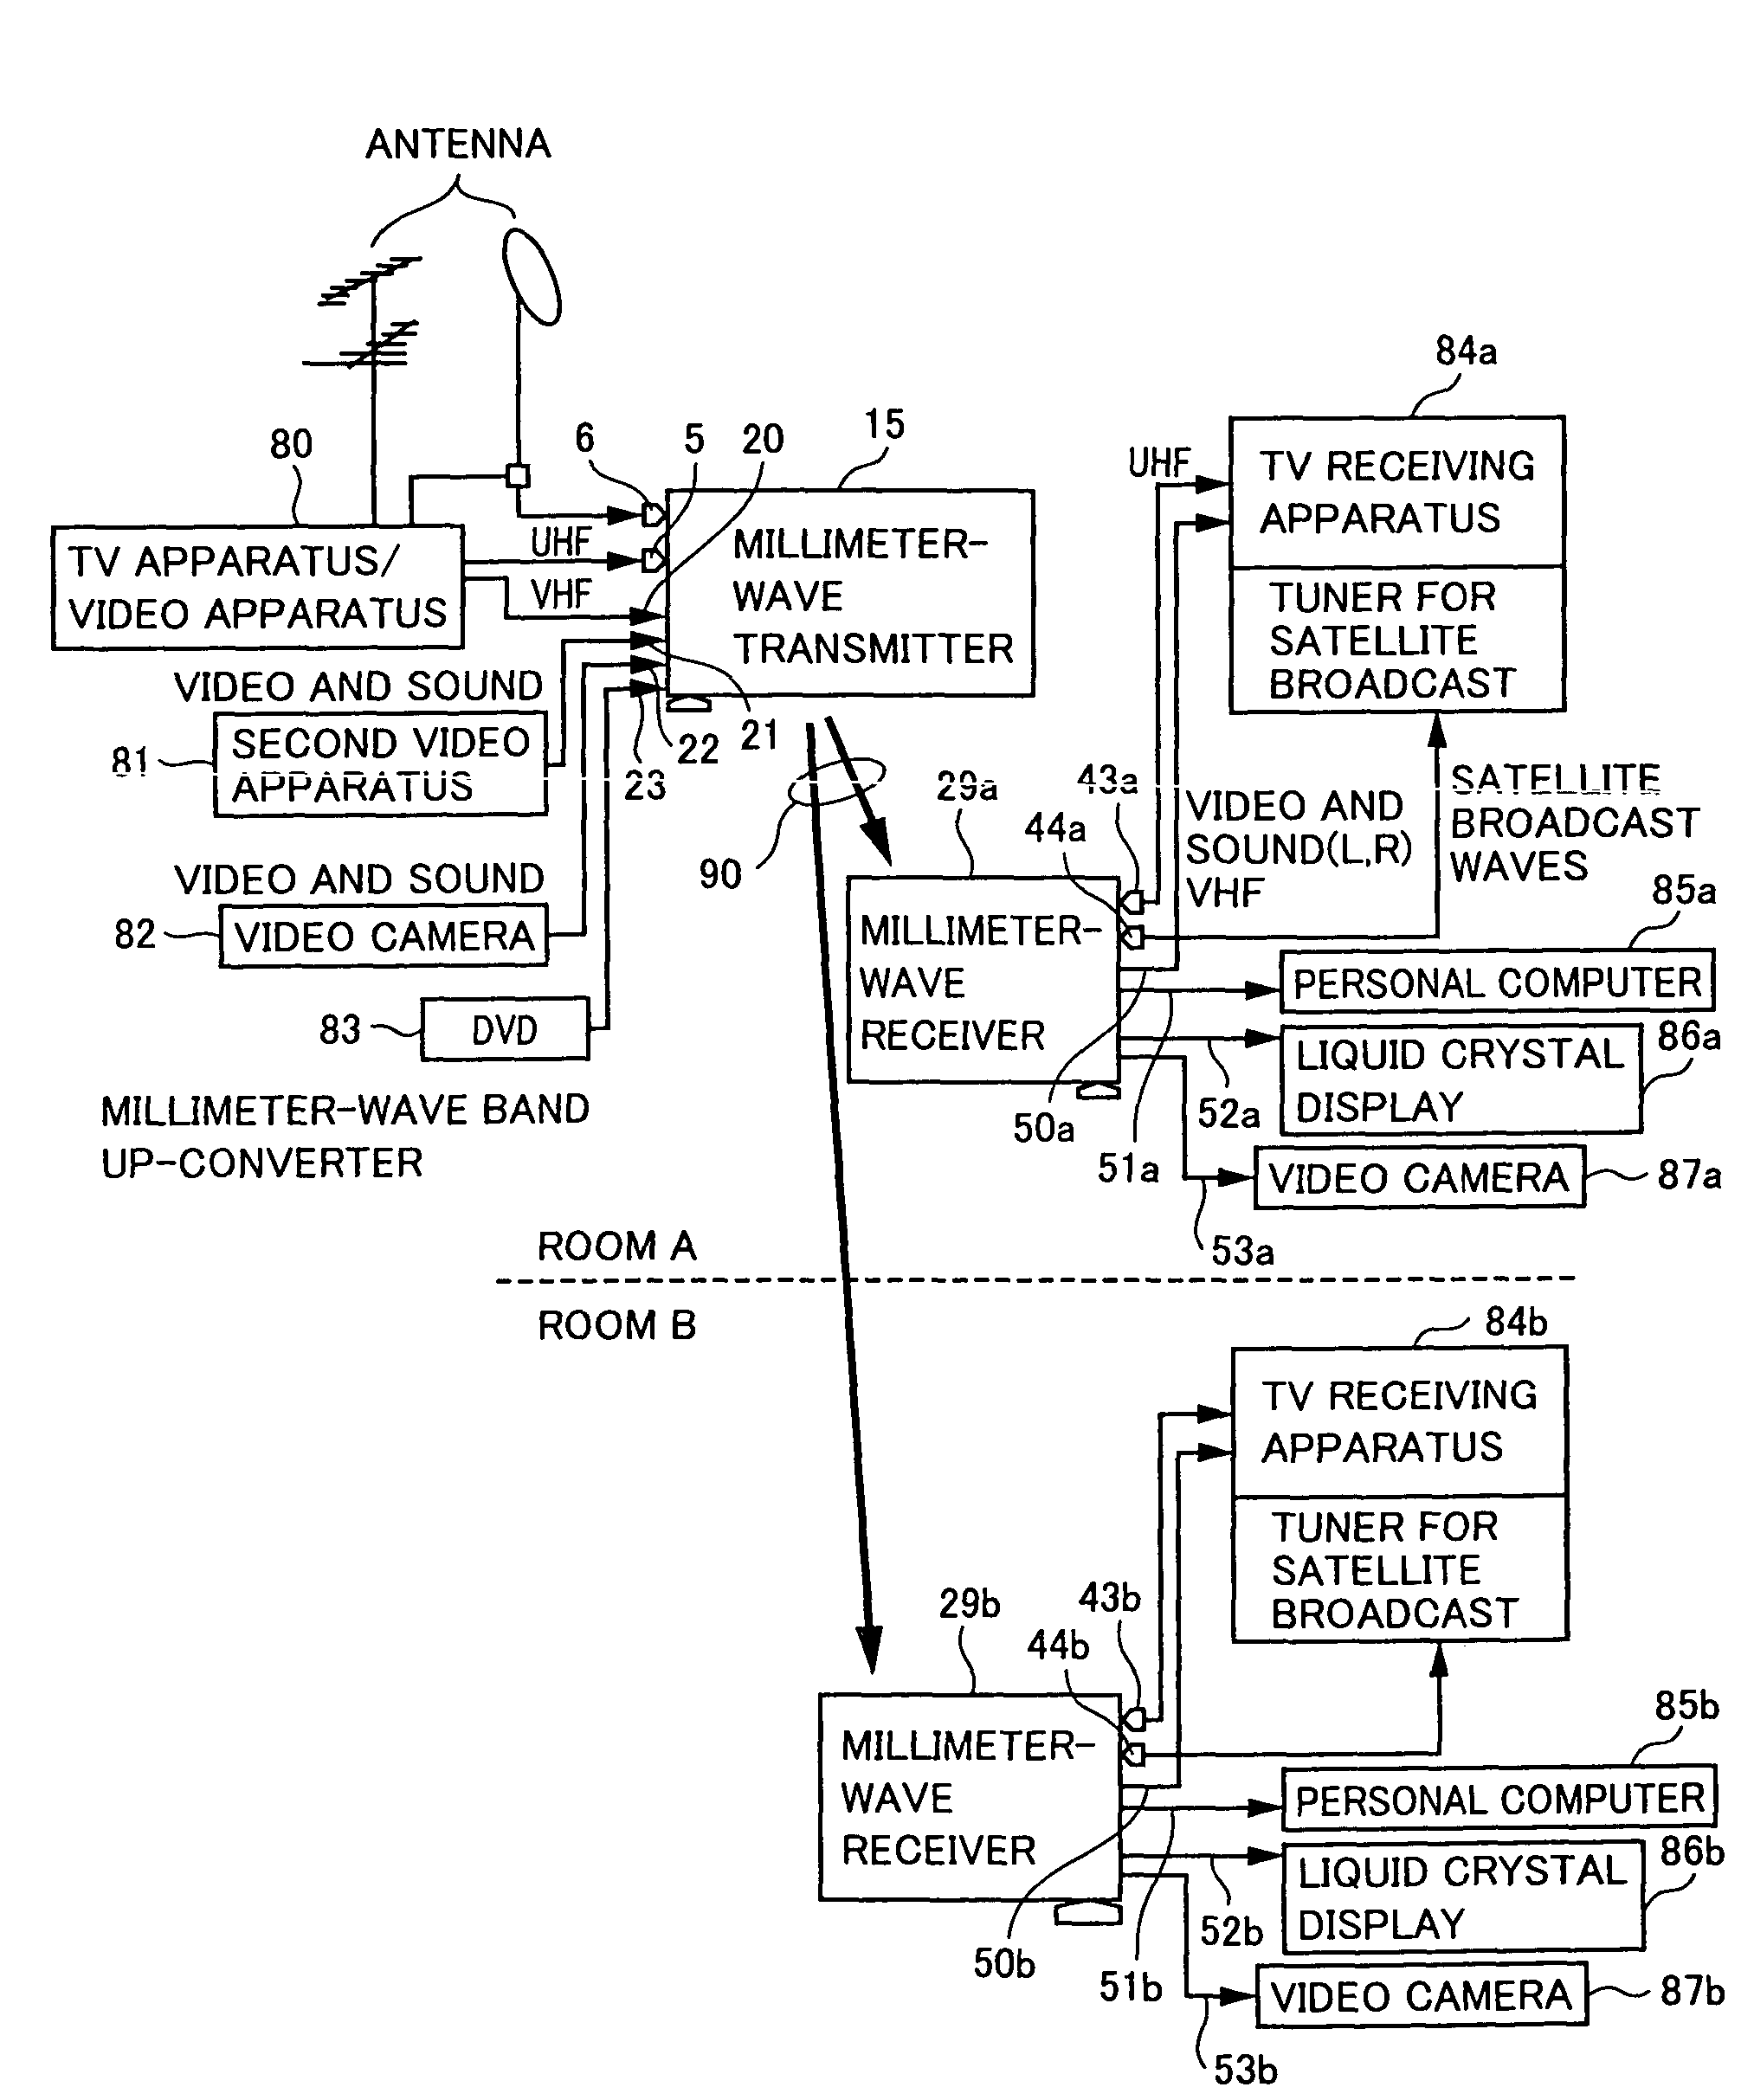 Radio communication apparatus, transmitter apparatus and receiver apparatus